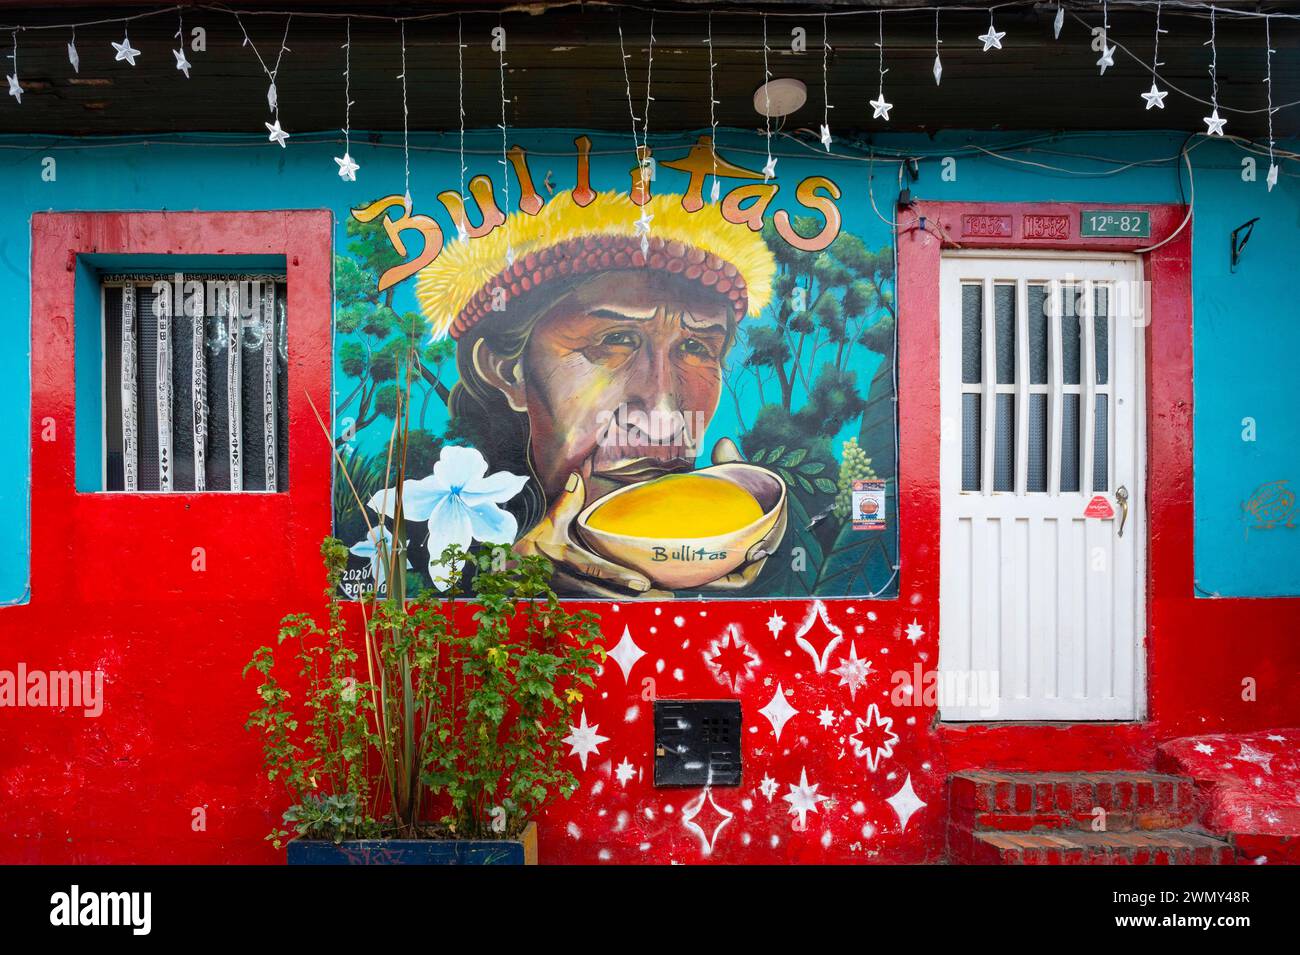 Colombia, distretto di Cundinamarca, Bogotà, zona di Candelaria, Street art Foto Stock